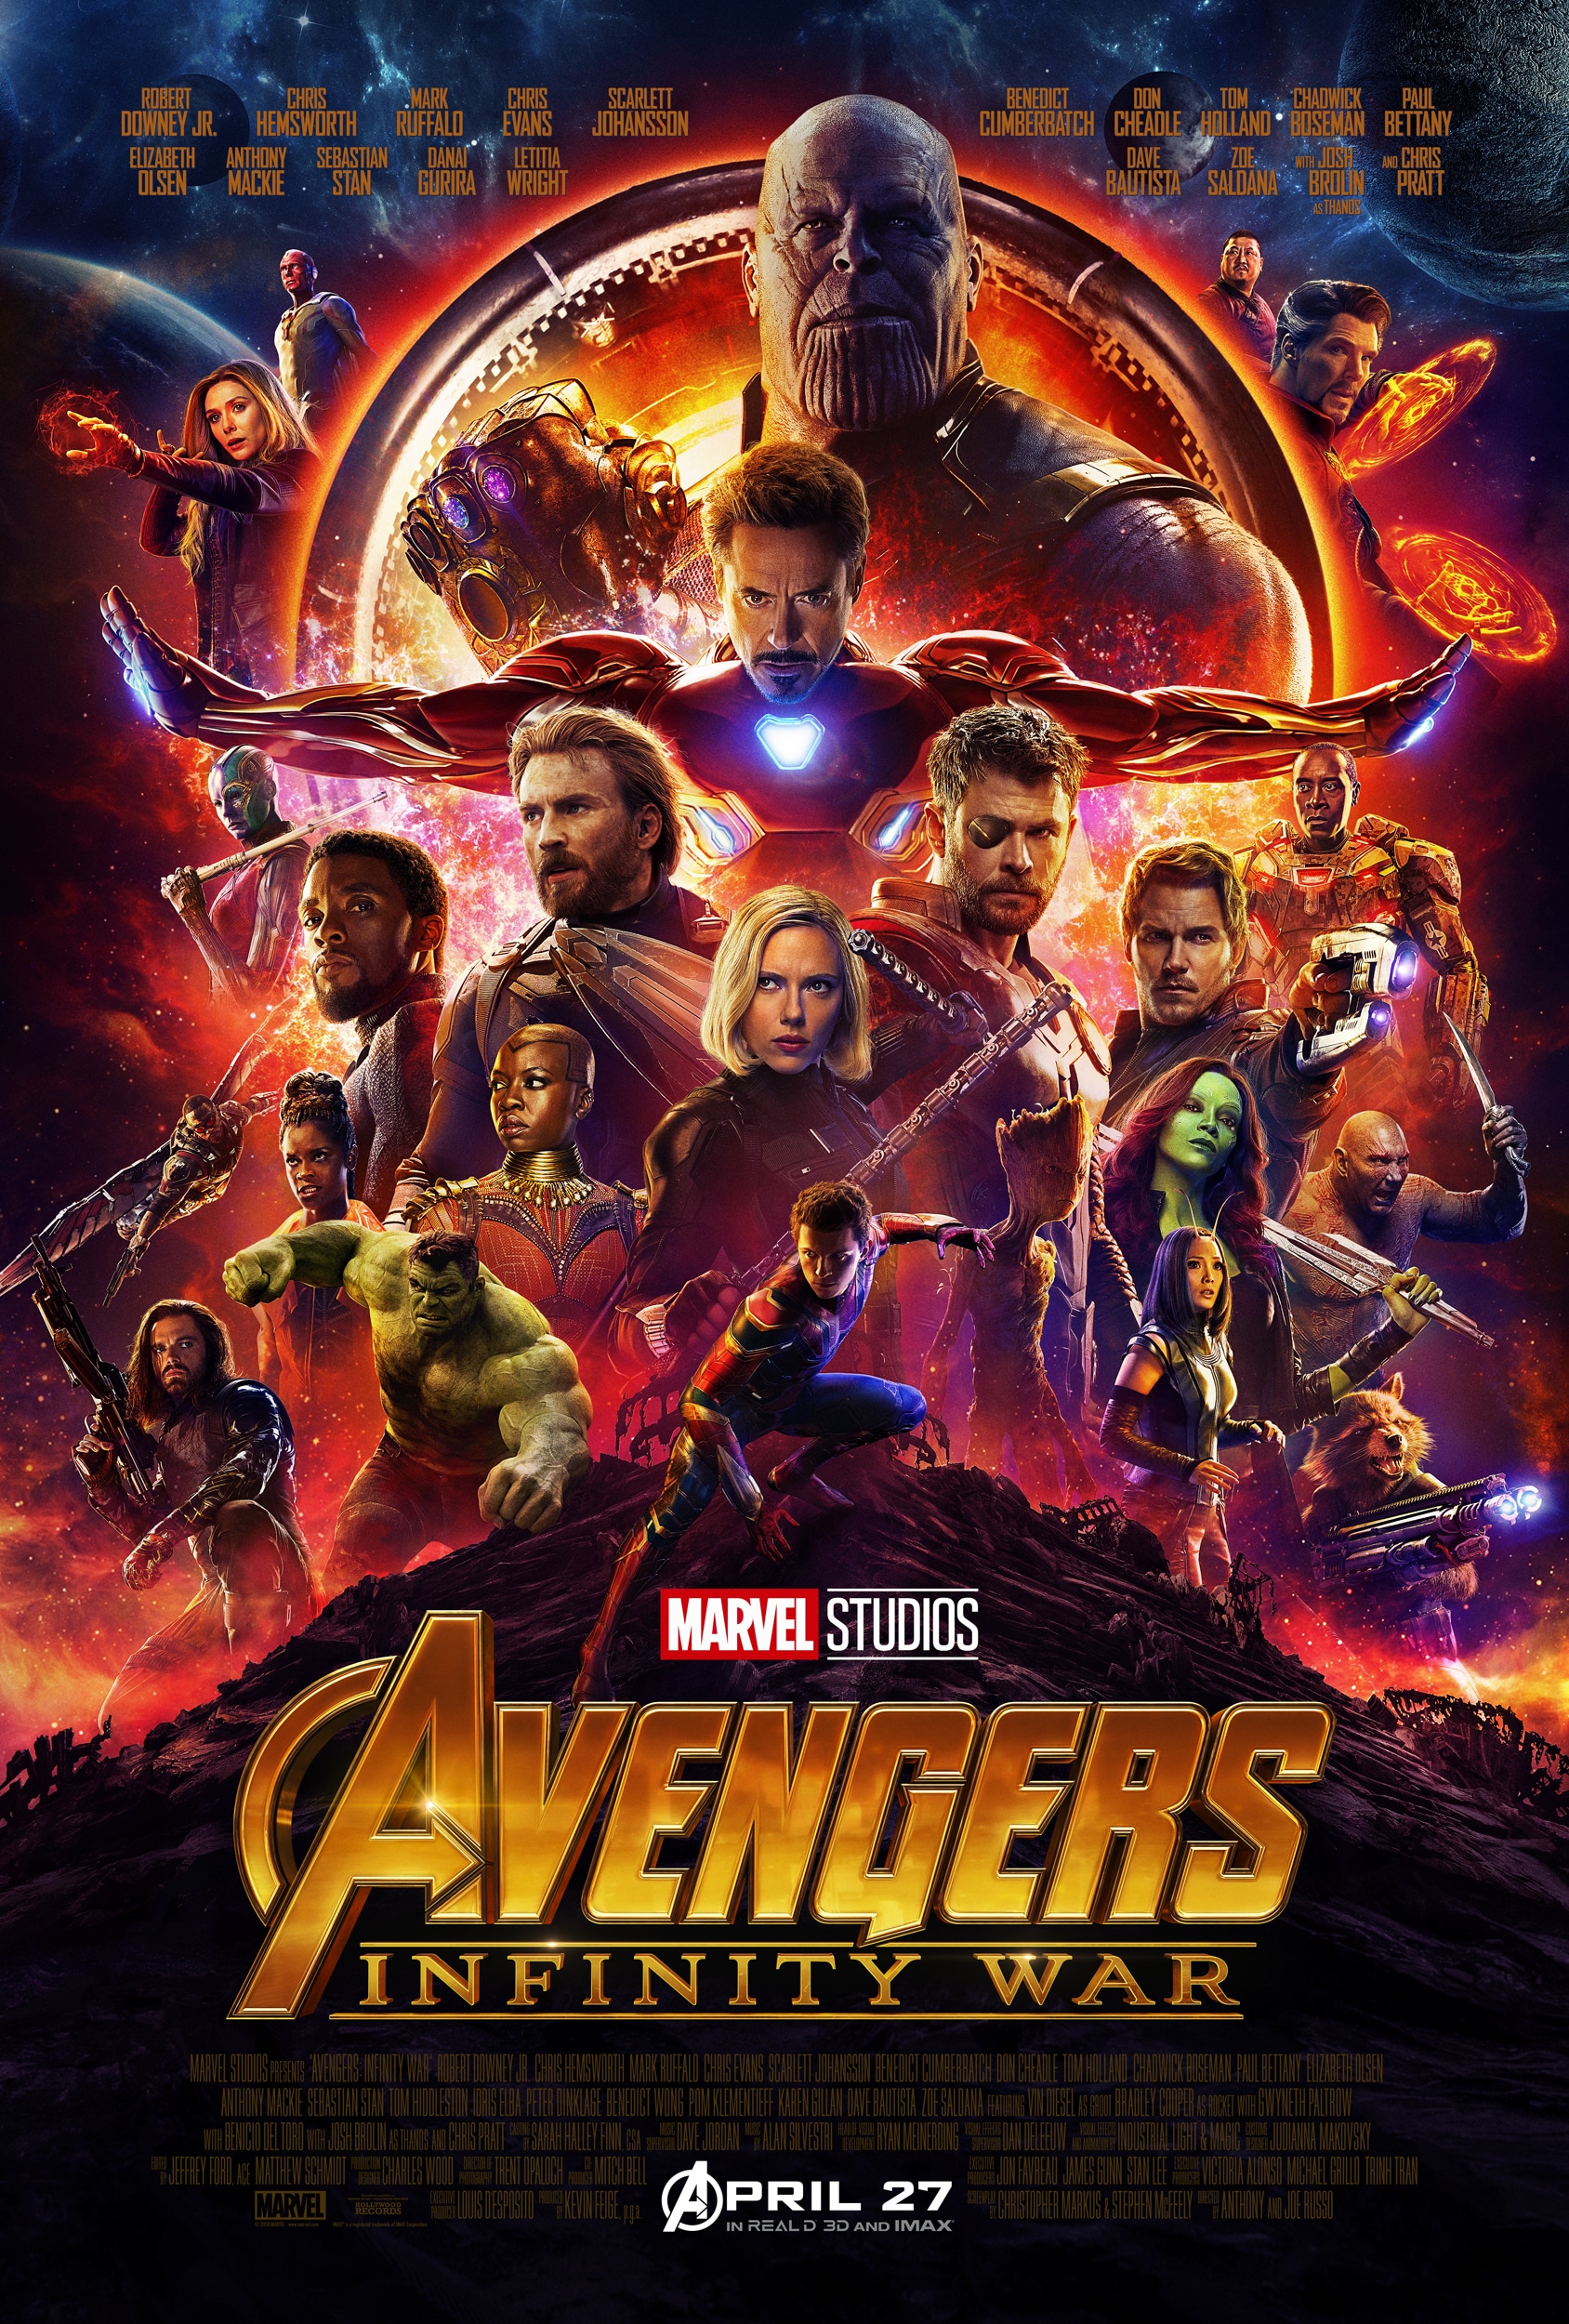 Marvel Studios' AVENGERS: INFINITY WAR Trailer and Posters! #InfinityWar